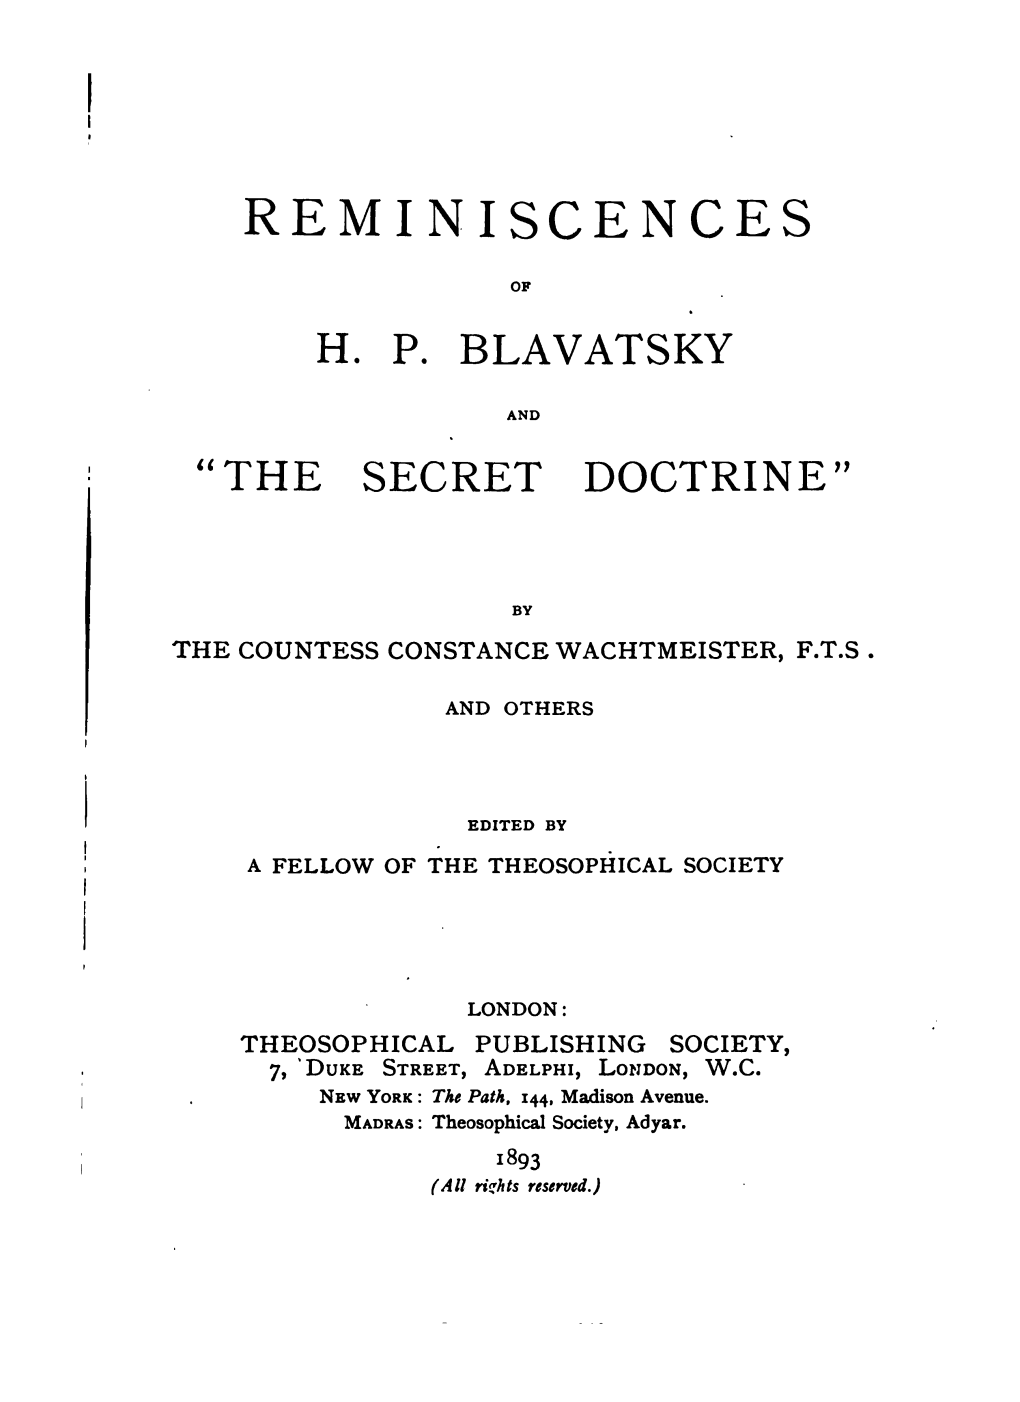 Reminiscences of H. P. Blavatsky and "The Secret Doctrine"